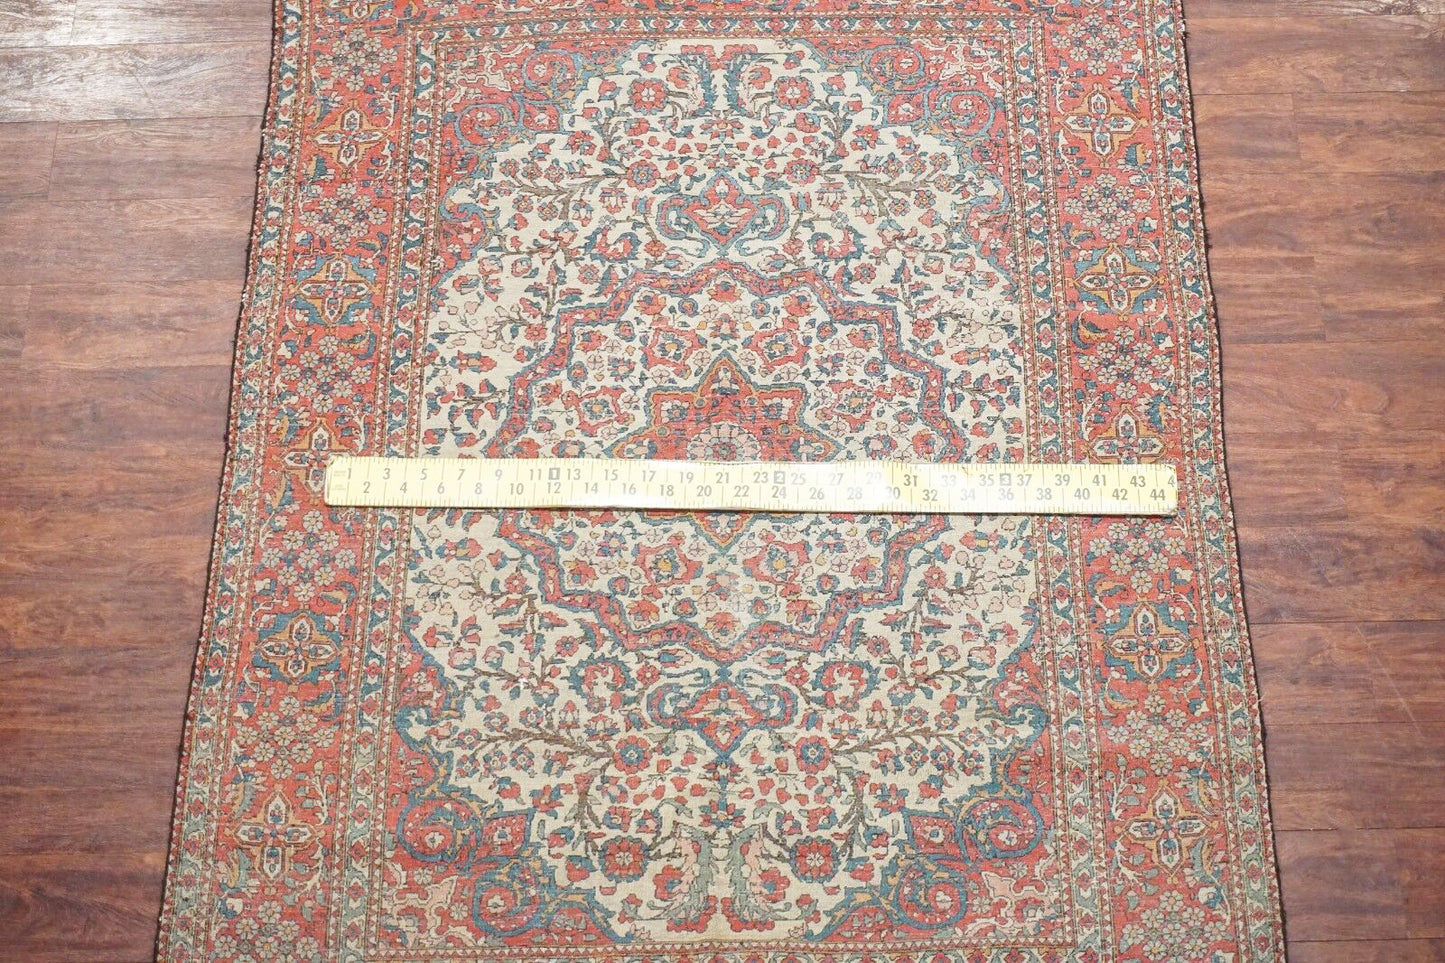 5X7 Antique Persian Isfahan Rug, circa 1900